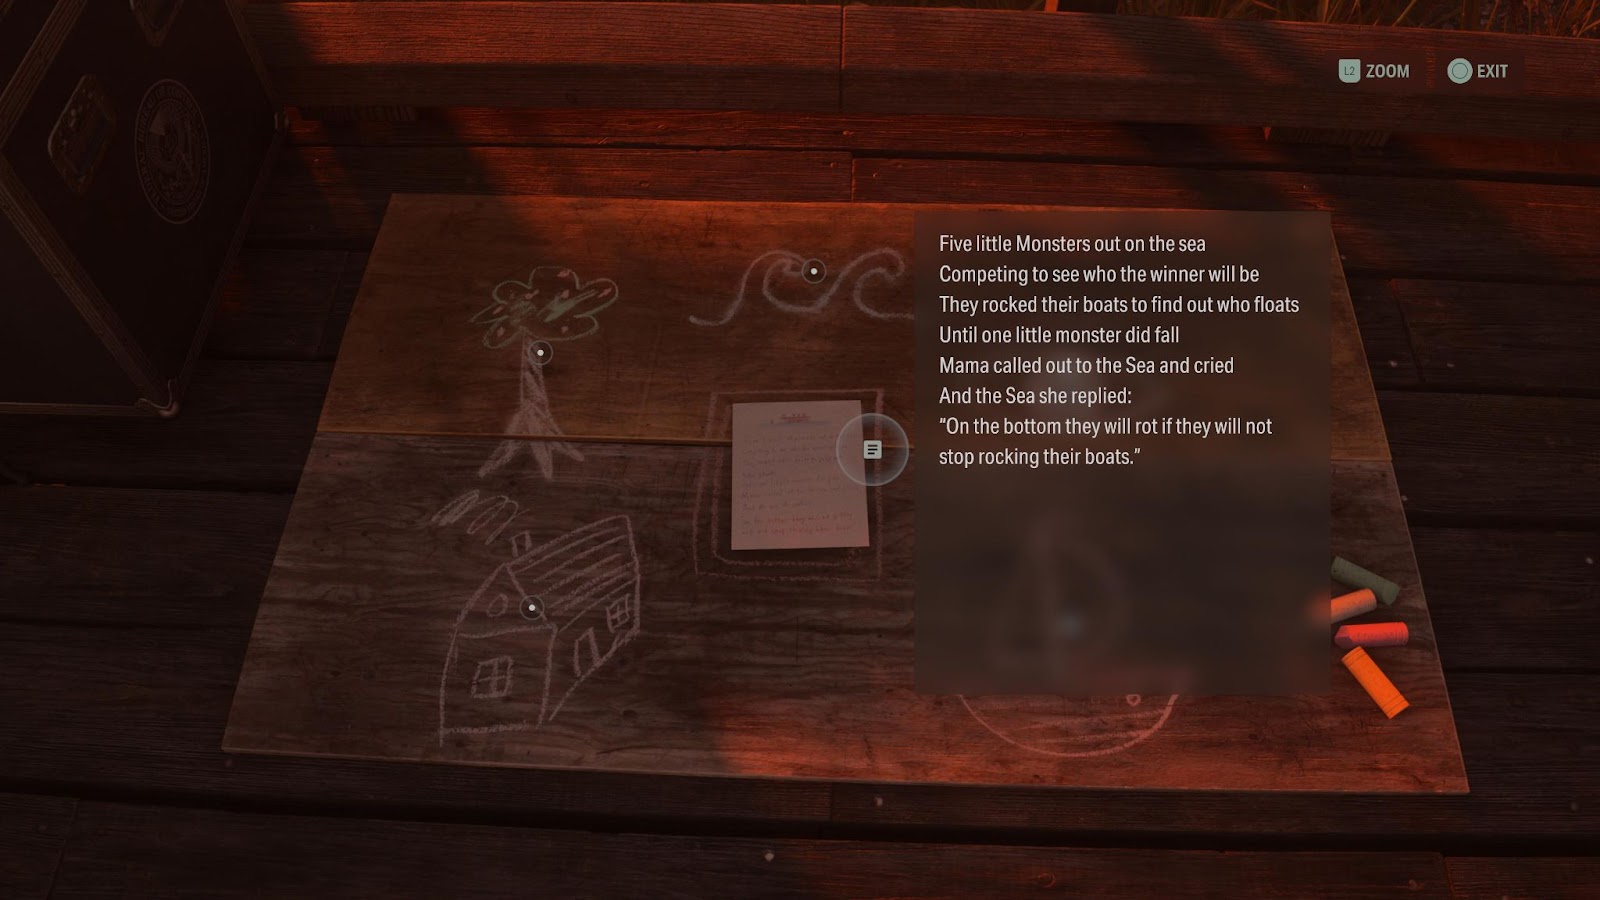 An in game screenshot of the boatyard nursery rhyme from Alan Wake 2. 